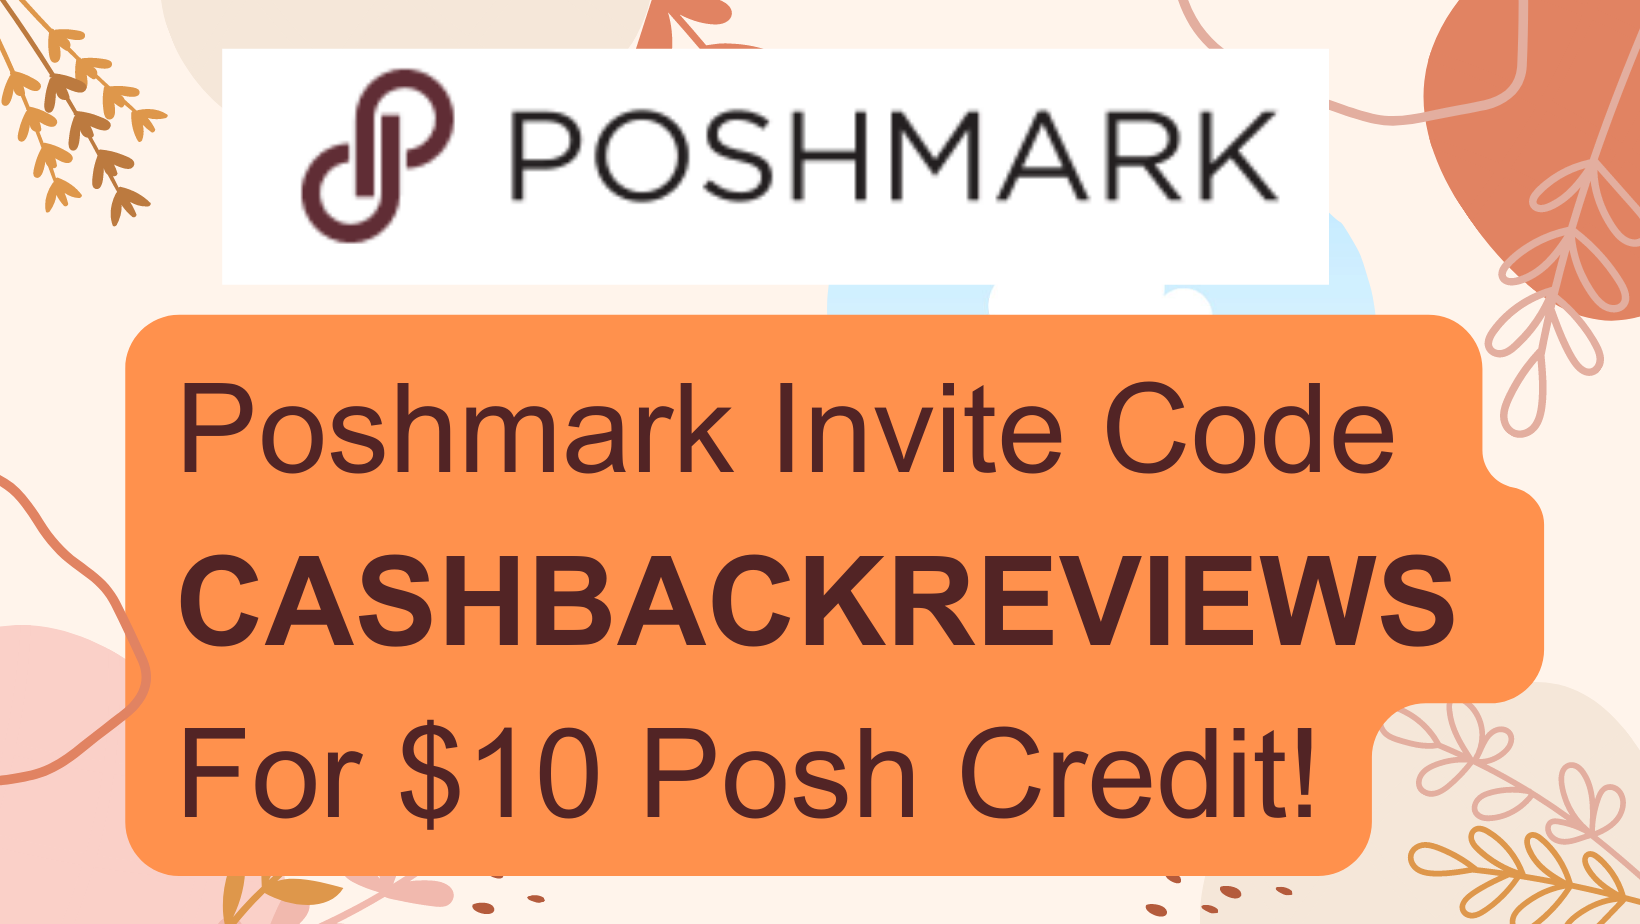 Poshmark Referral Code CASHBACKREVIEWS for 10 credit